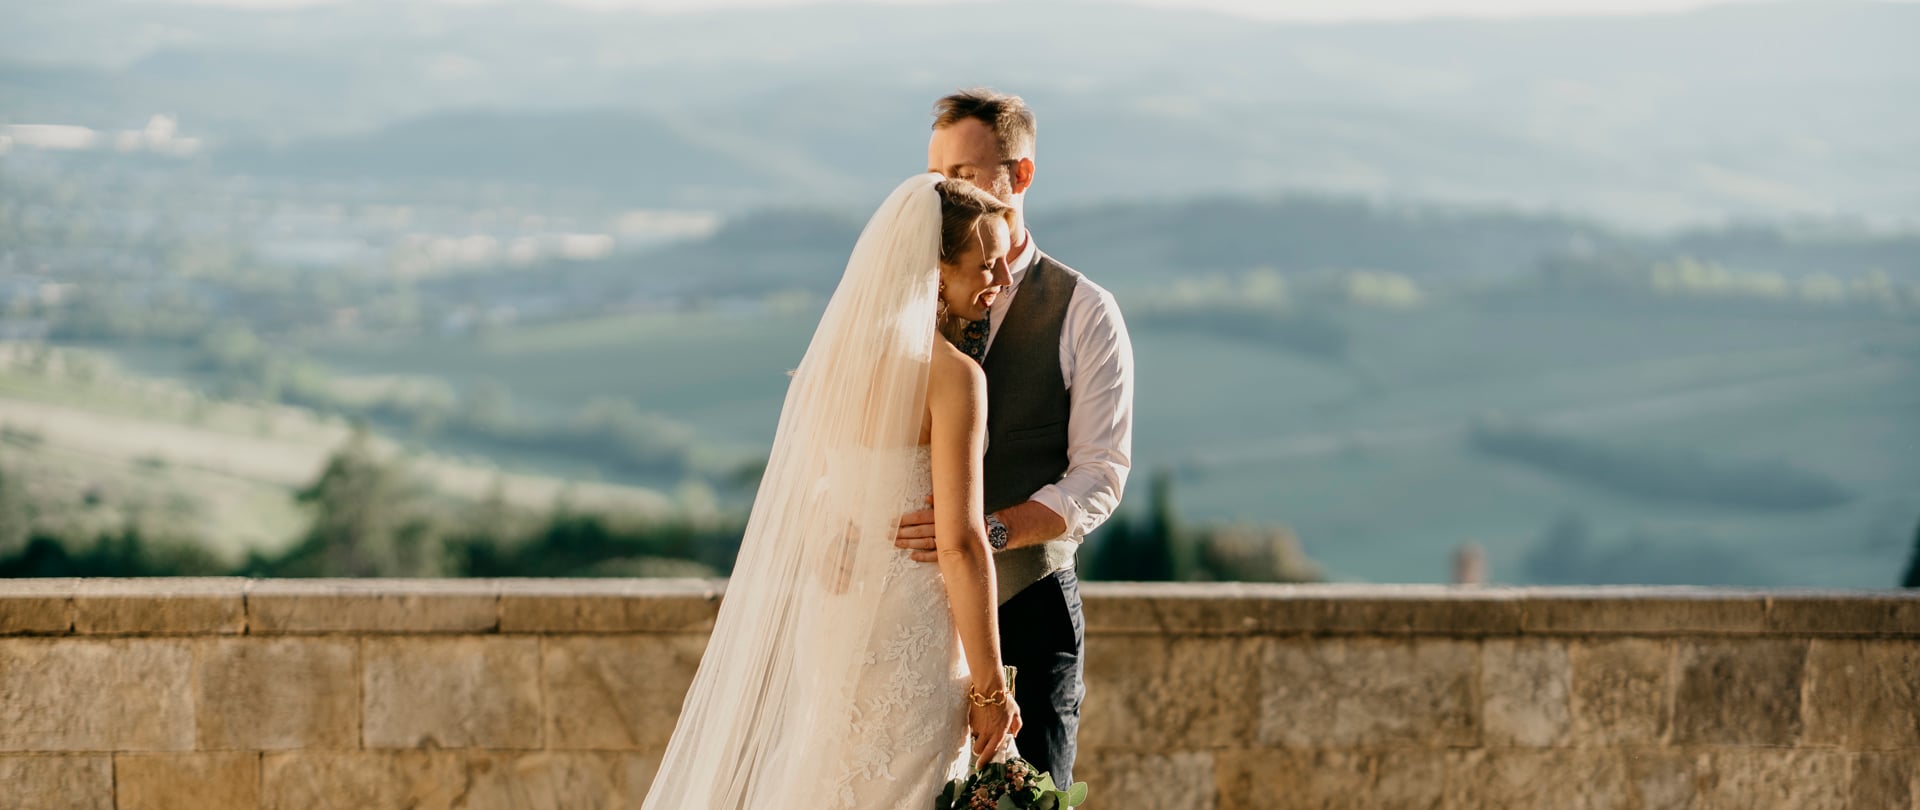 Klara & Oli Wedding Video Filmed at Tuscany, Italy